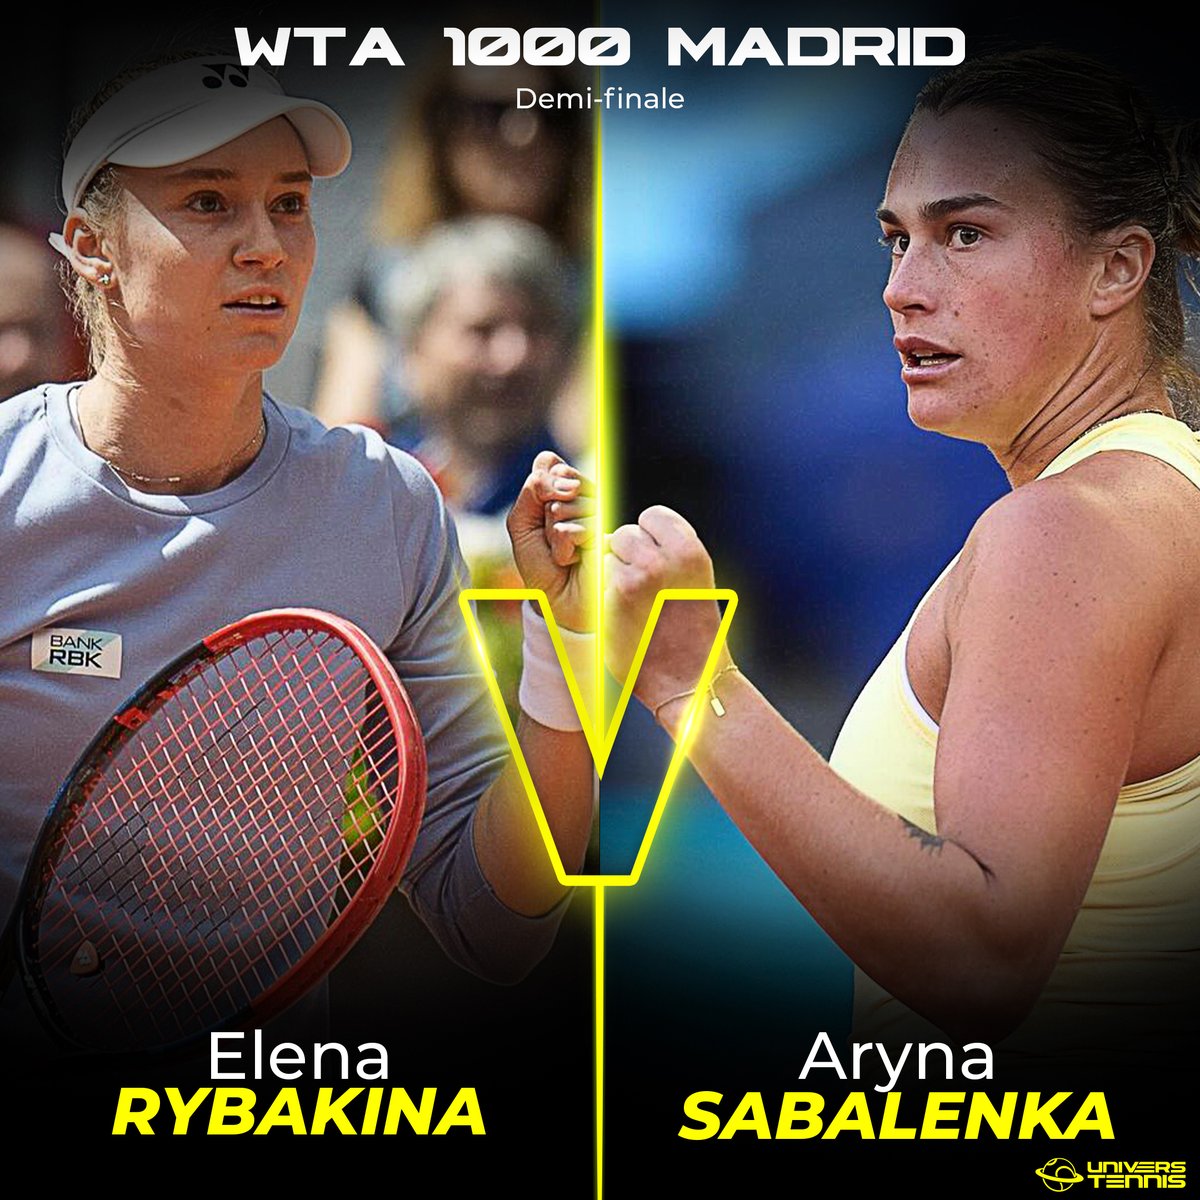 🔒 DEMI-FINALE - WTA 1000 MADRID 🇪🇸 🔥 Elena Rybakina, n°4 mondiale 8 victoires consécutives 🔥 Aryna Sabalenka, n°2 mondiale 10 victoires consécutives à Madrid Qui va s'imposer ? 🍿